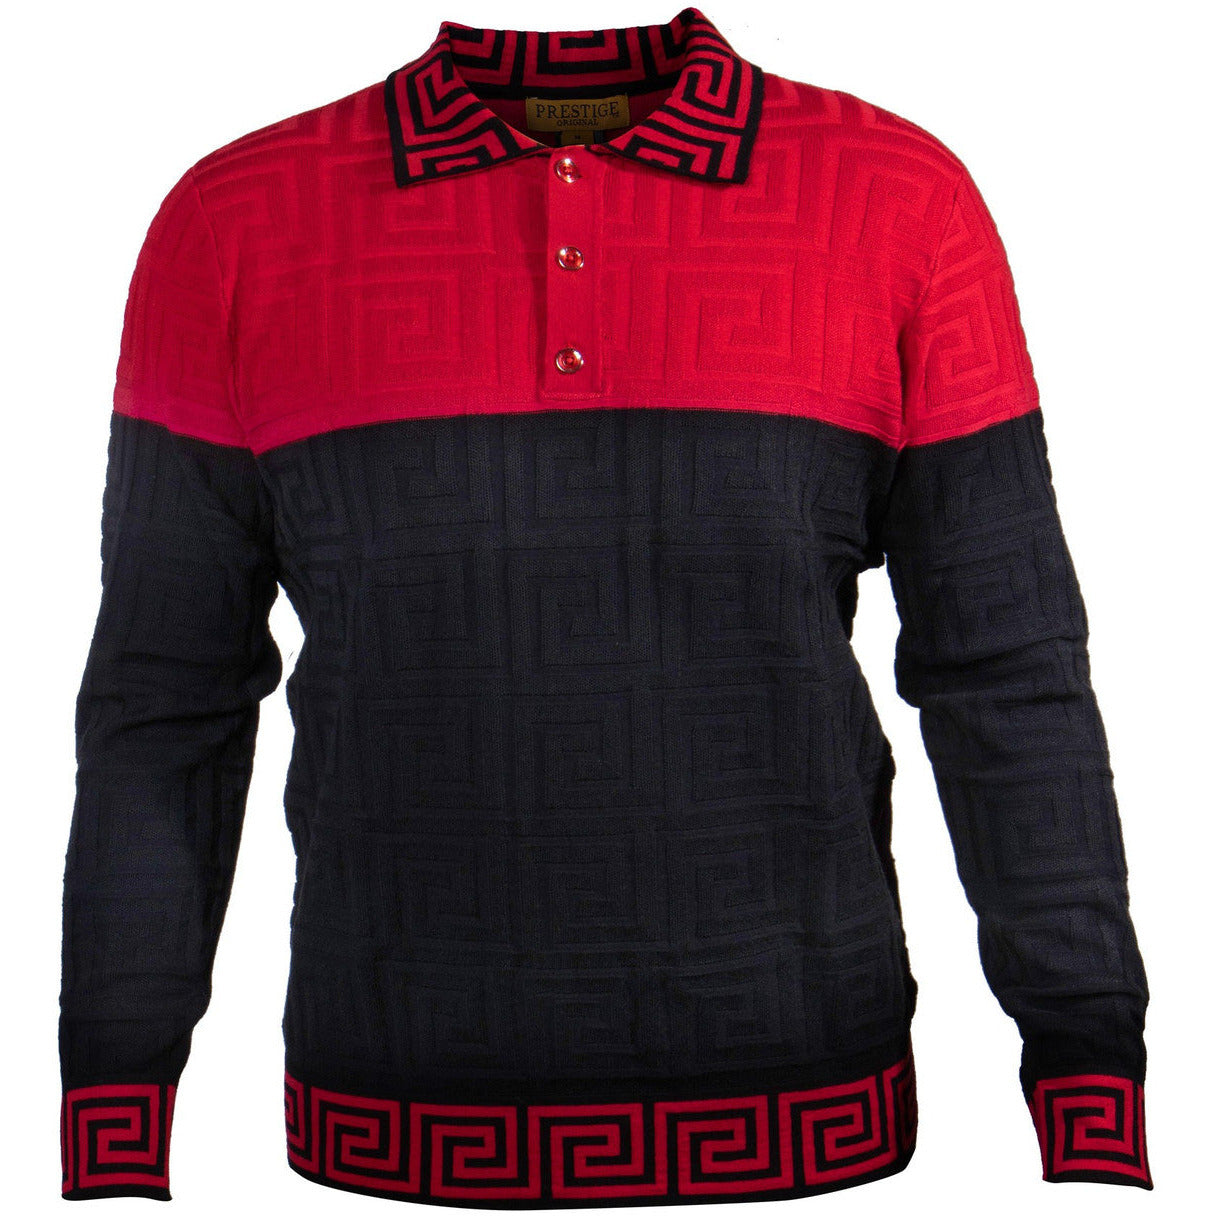 Prestige Red Black Two Tone Polo Shirt